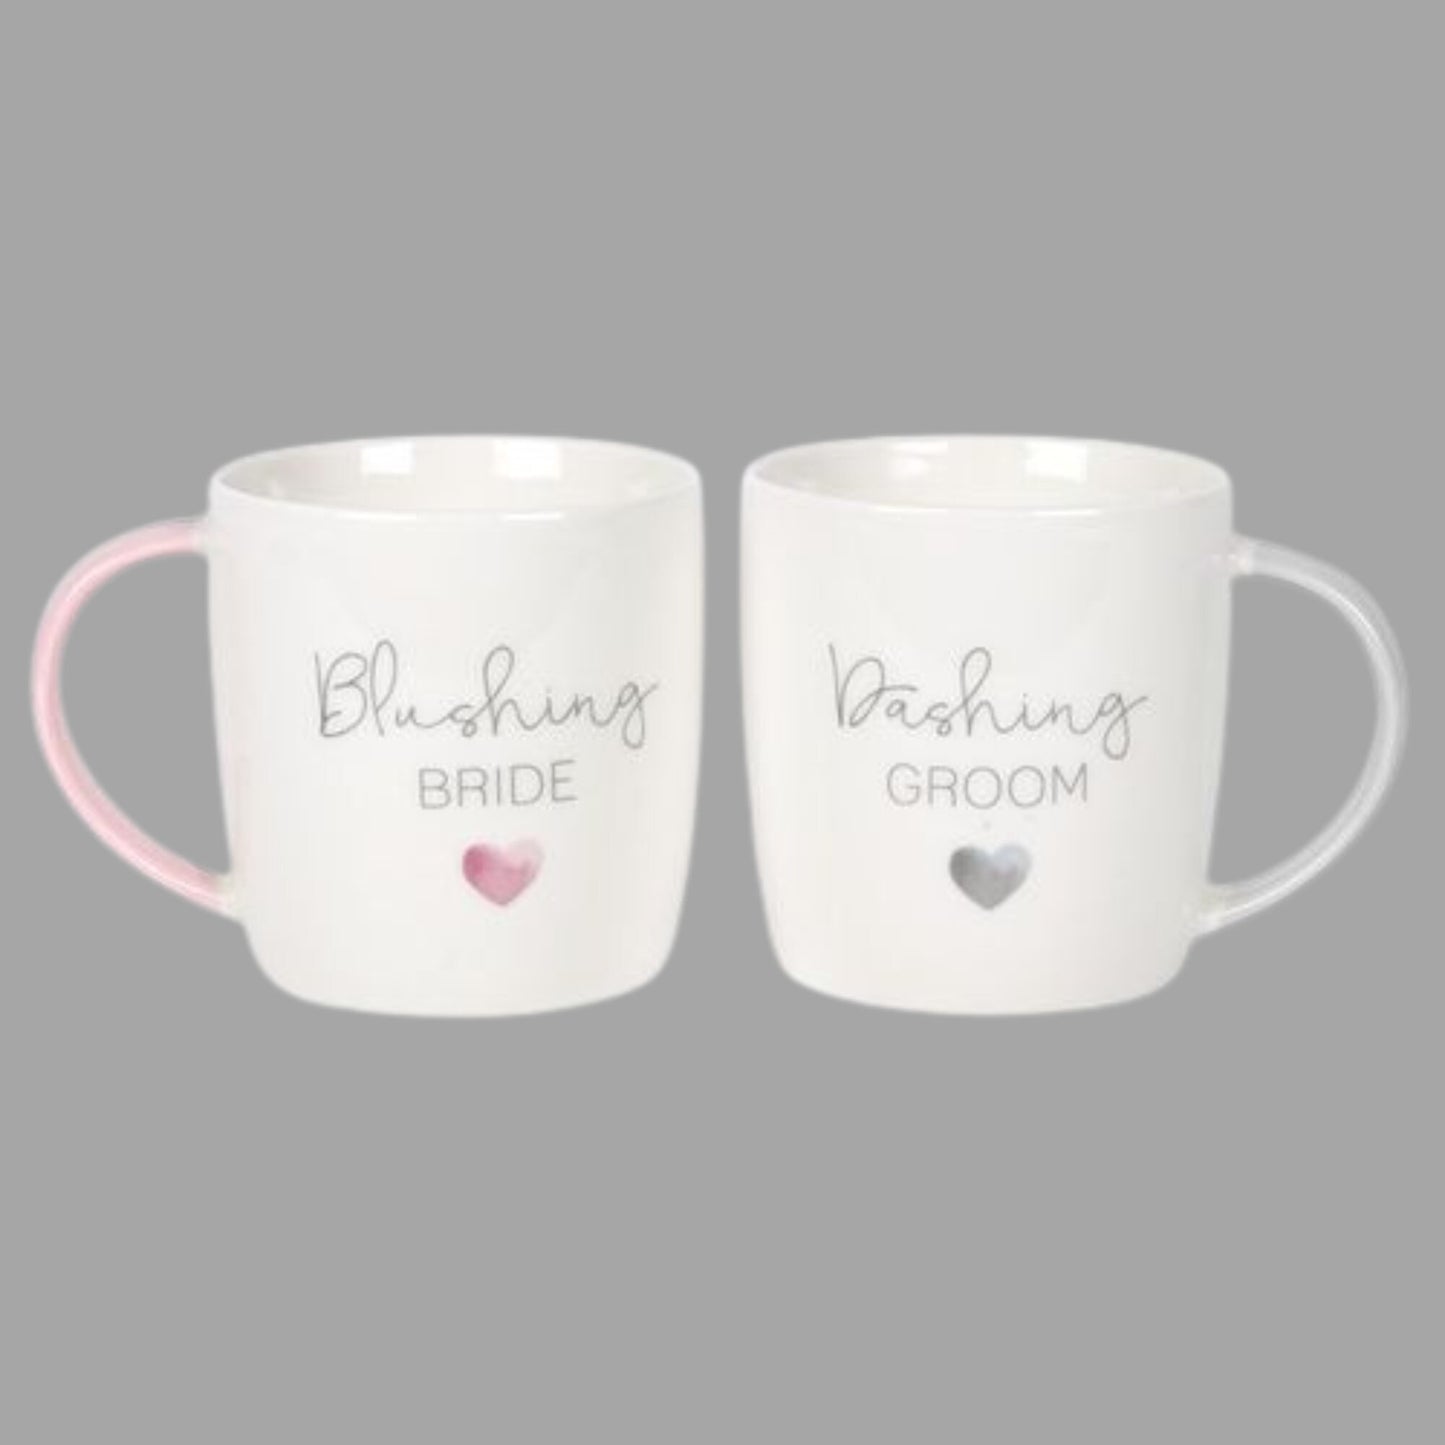 Bride And Groom Mugs Set, Wedding His And Hers Mug Set, Blushing Bride Dashing Groom Cups, Cute Fun Wedding Gift